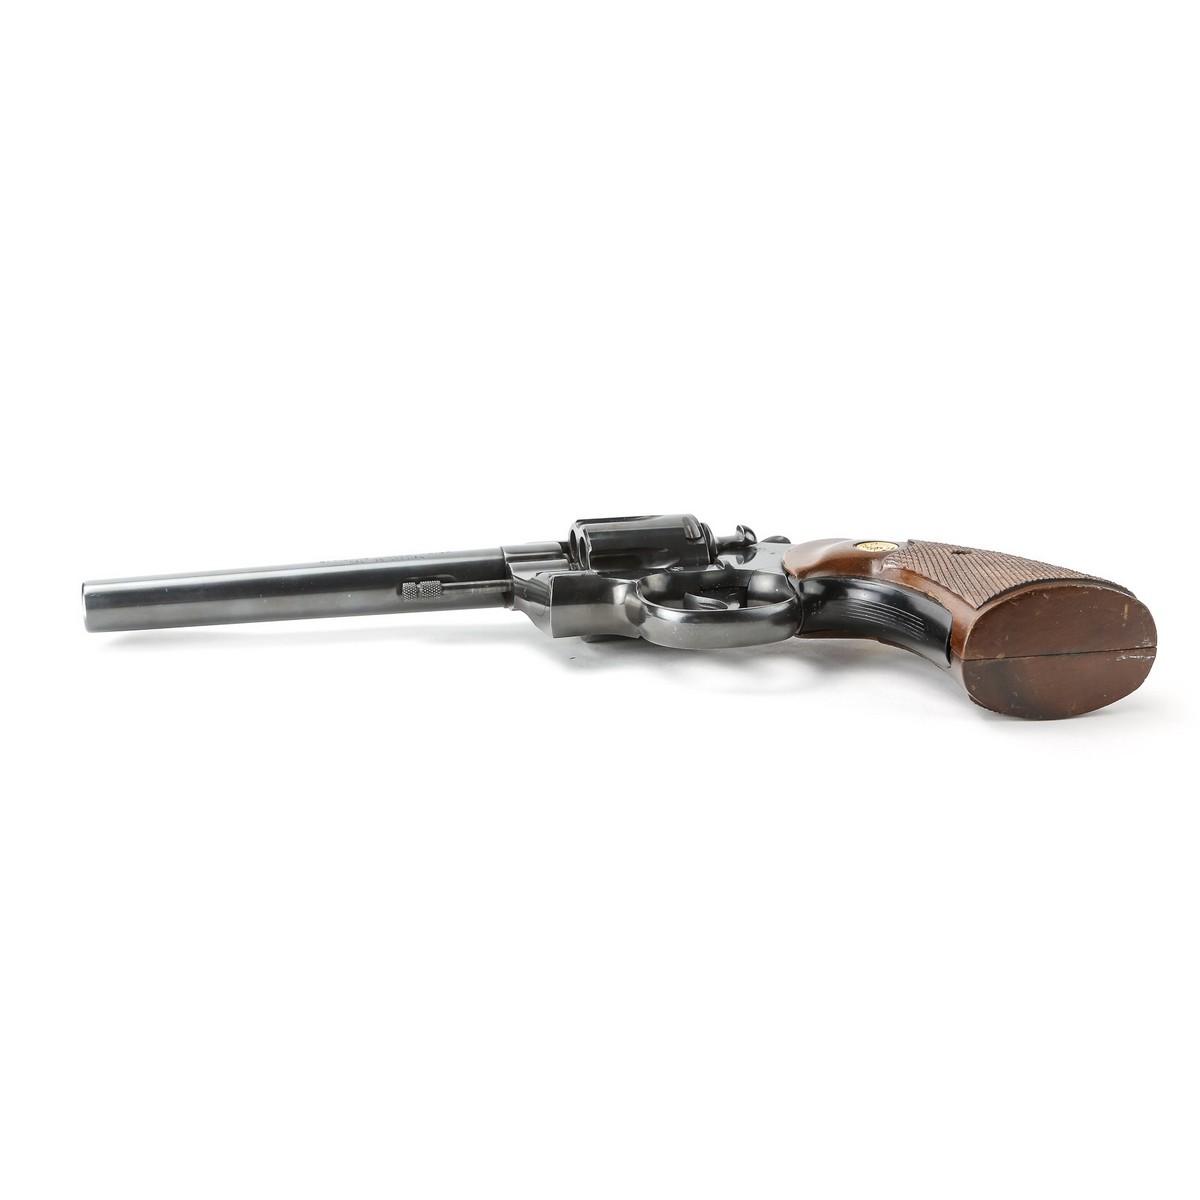 Colt Officer's Model Match .38 Special Revolver